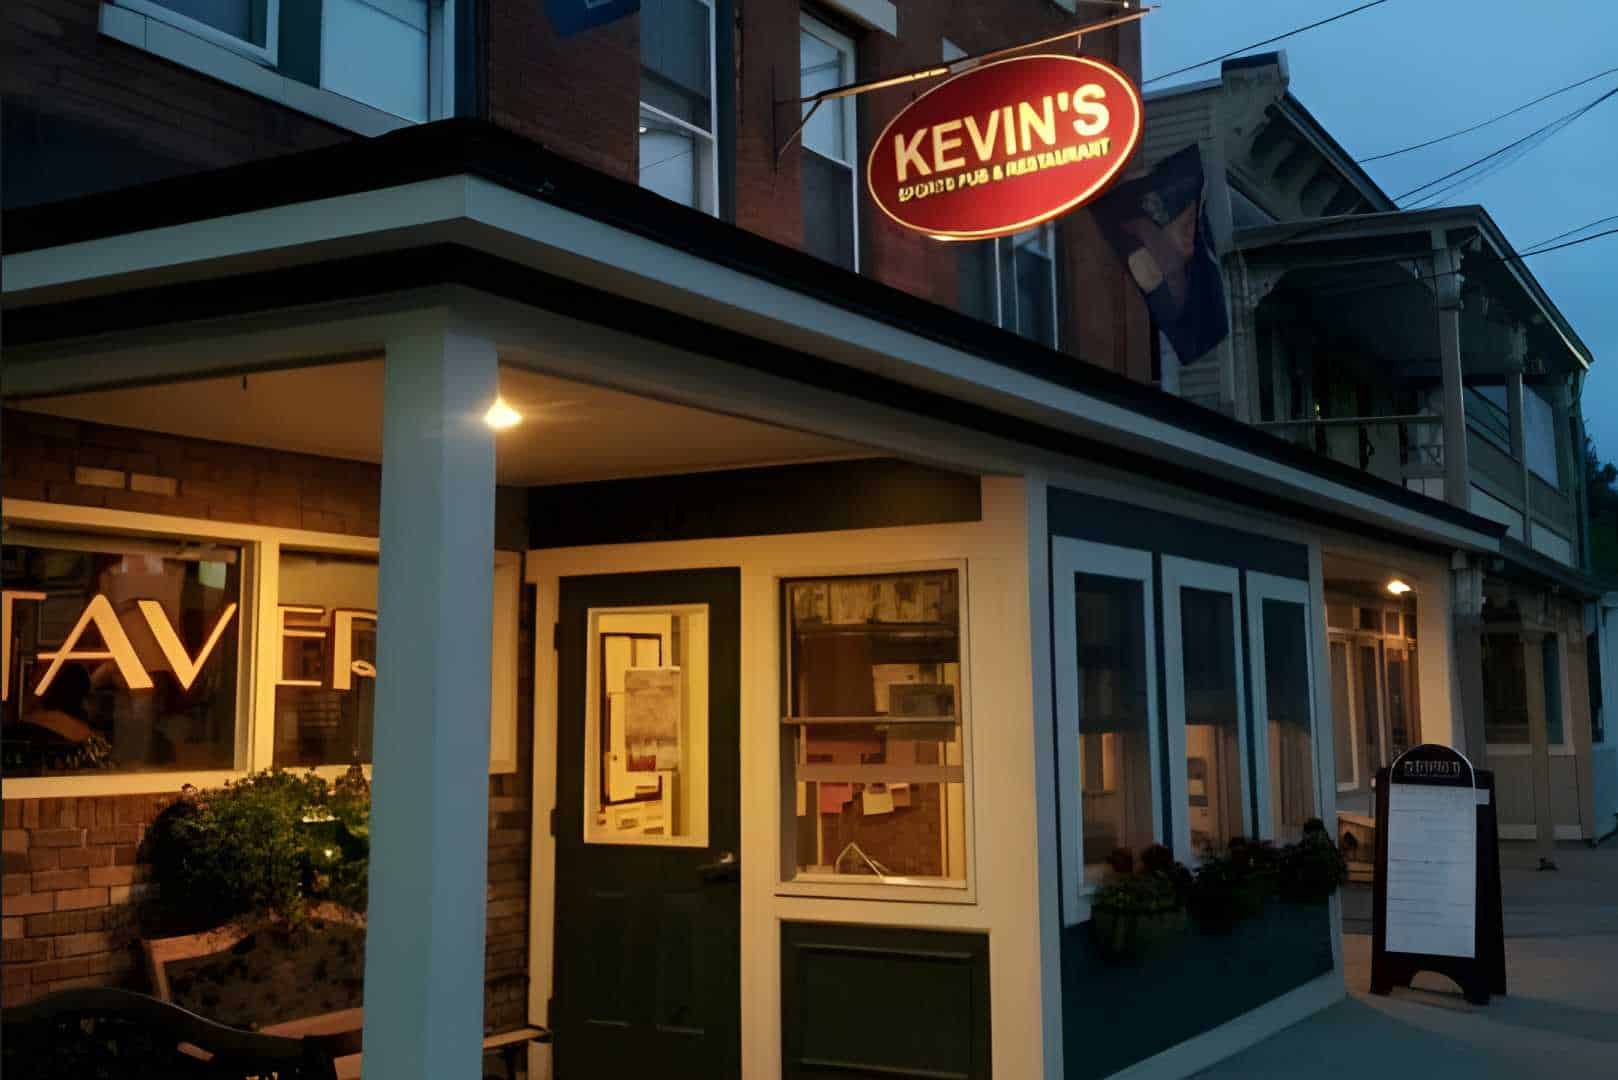 Kevin’s Sports Pub & Restaurant